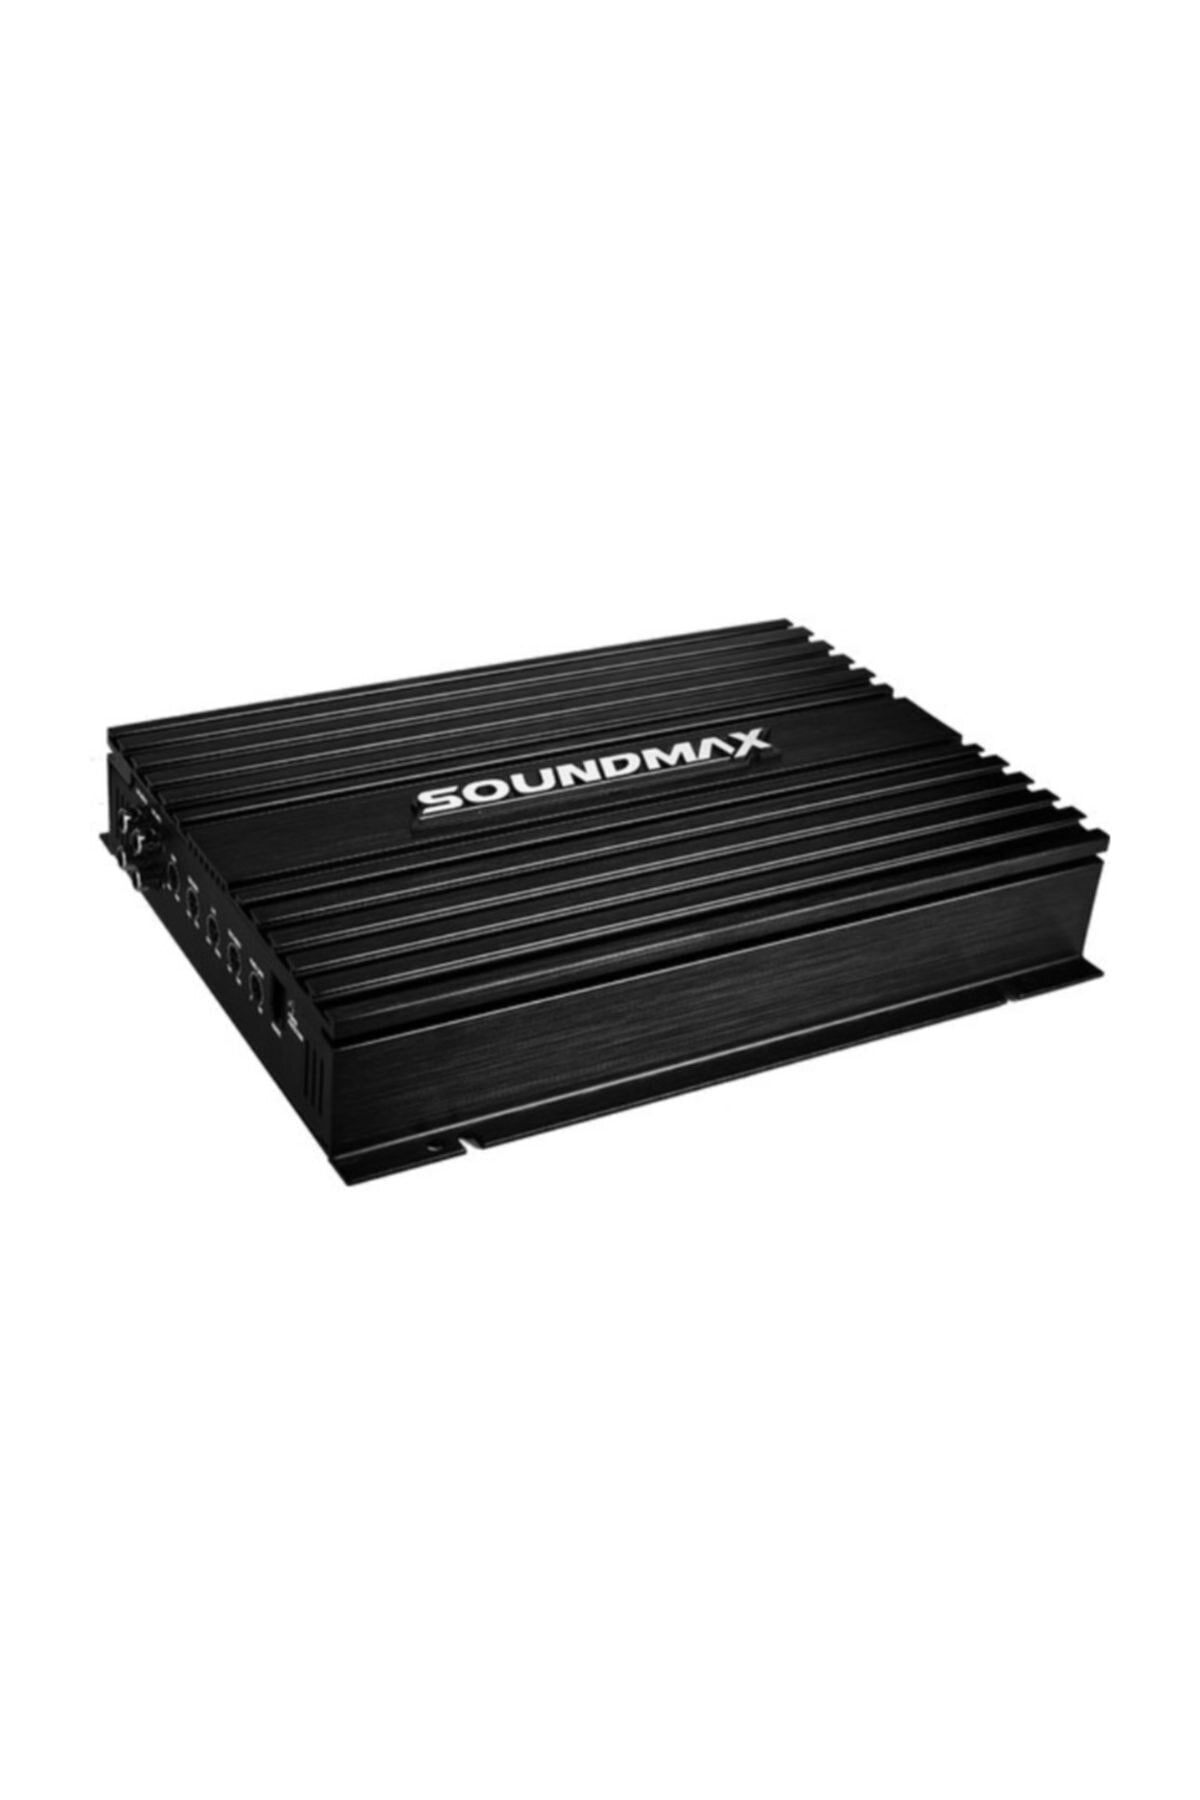 Soundmax Sx-600.1d Oto Mono Amfi 4000 Watt